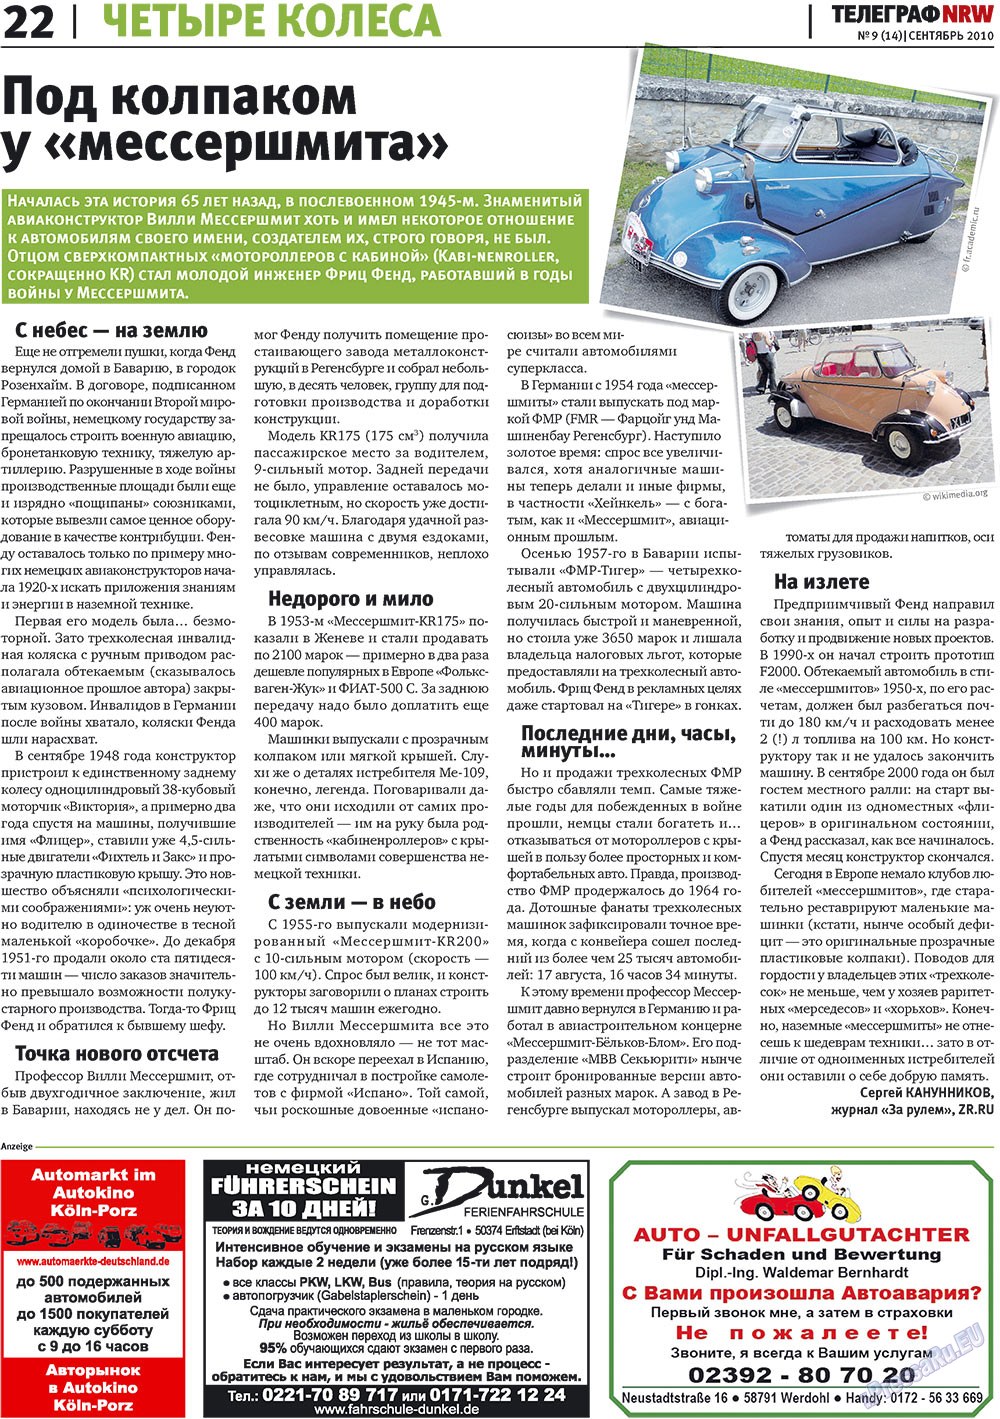 Телеграф NRW, газета. 2010 №9 стр.22